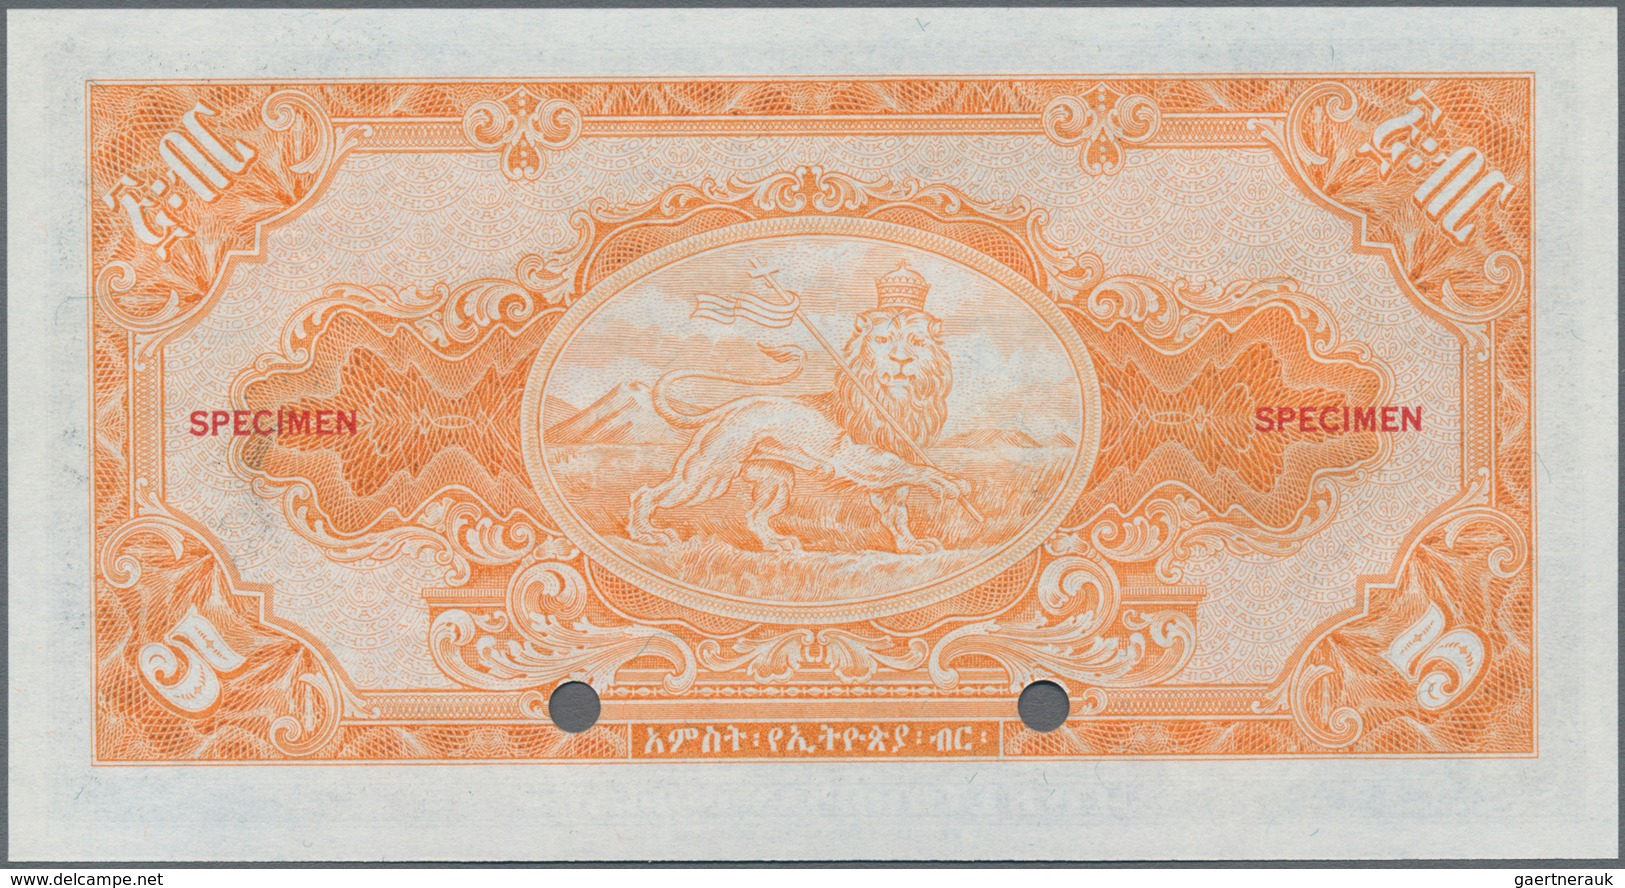 Ethiopia / Äthiopien: The State Bank Of Ethiopia 5 Dollars ND(1945) SPECIMEN With Signature Rozell, - Aethiopien